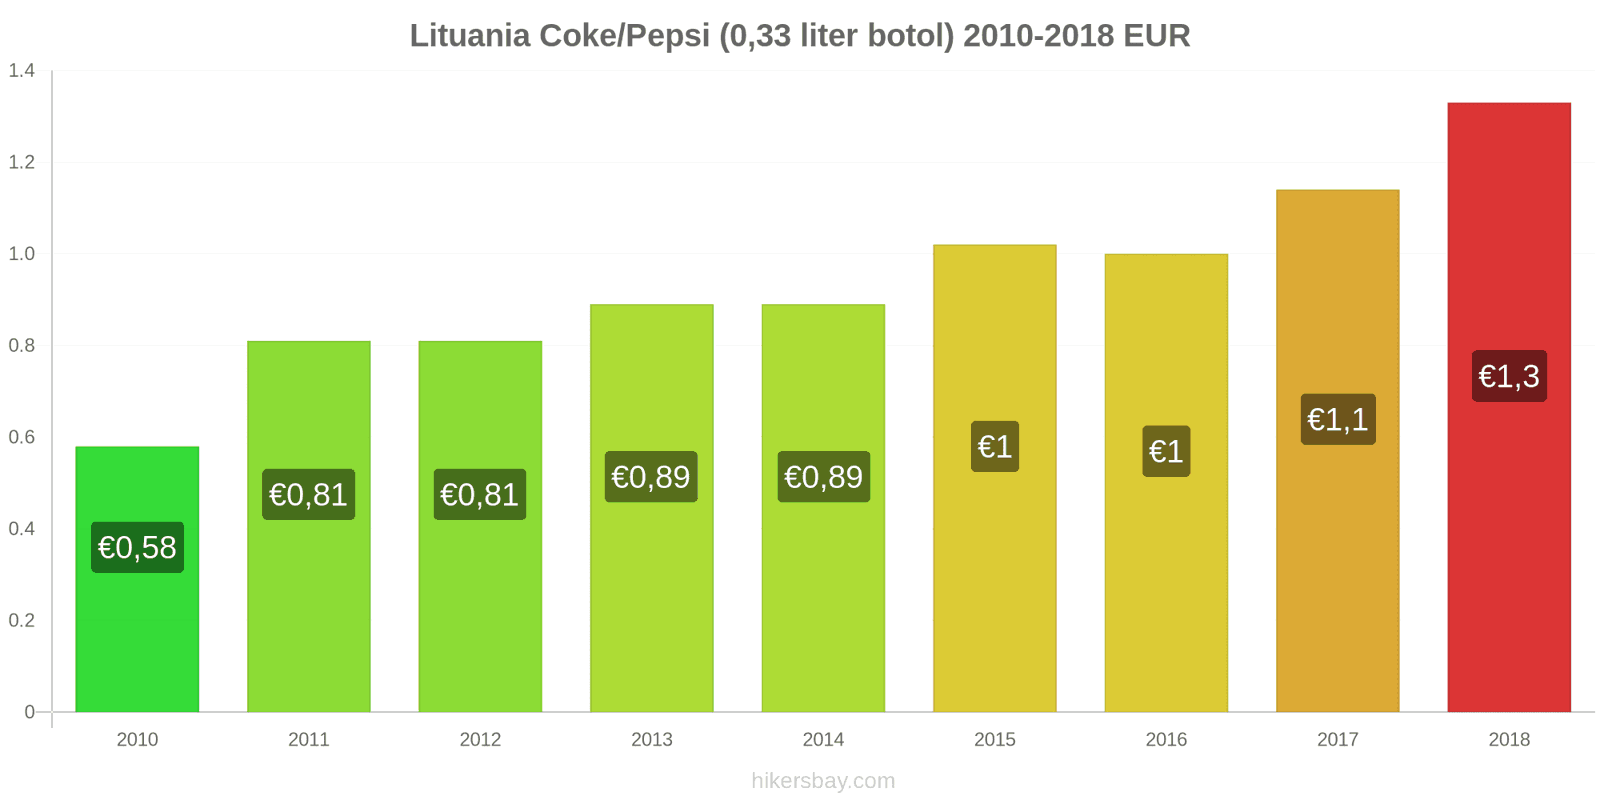 Lituania perubahan harga Coca-Cola/Pepsi (botol 0.33 liter) hikersbay.com